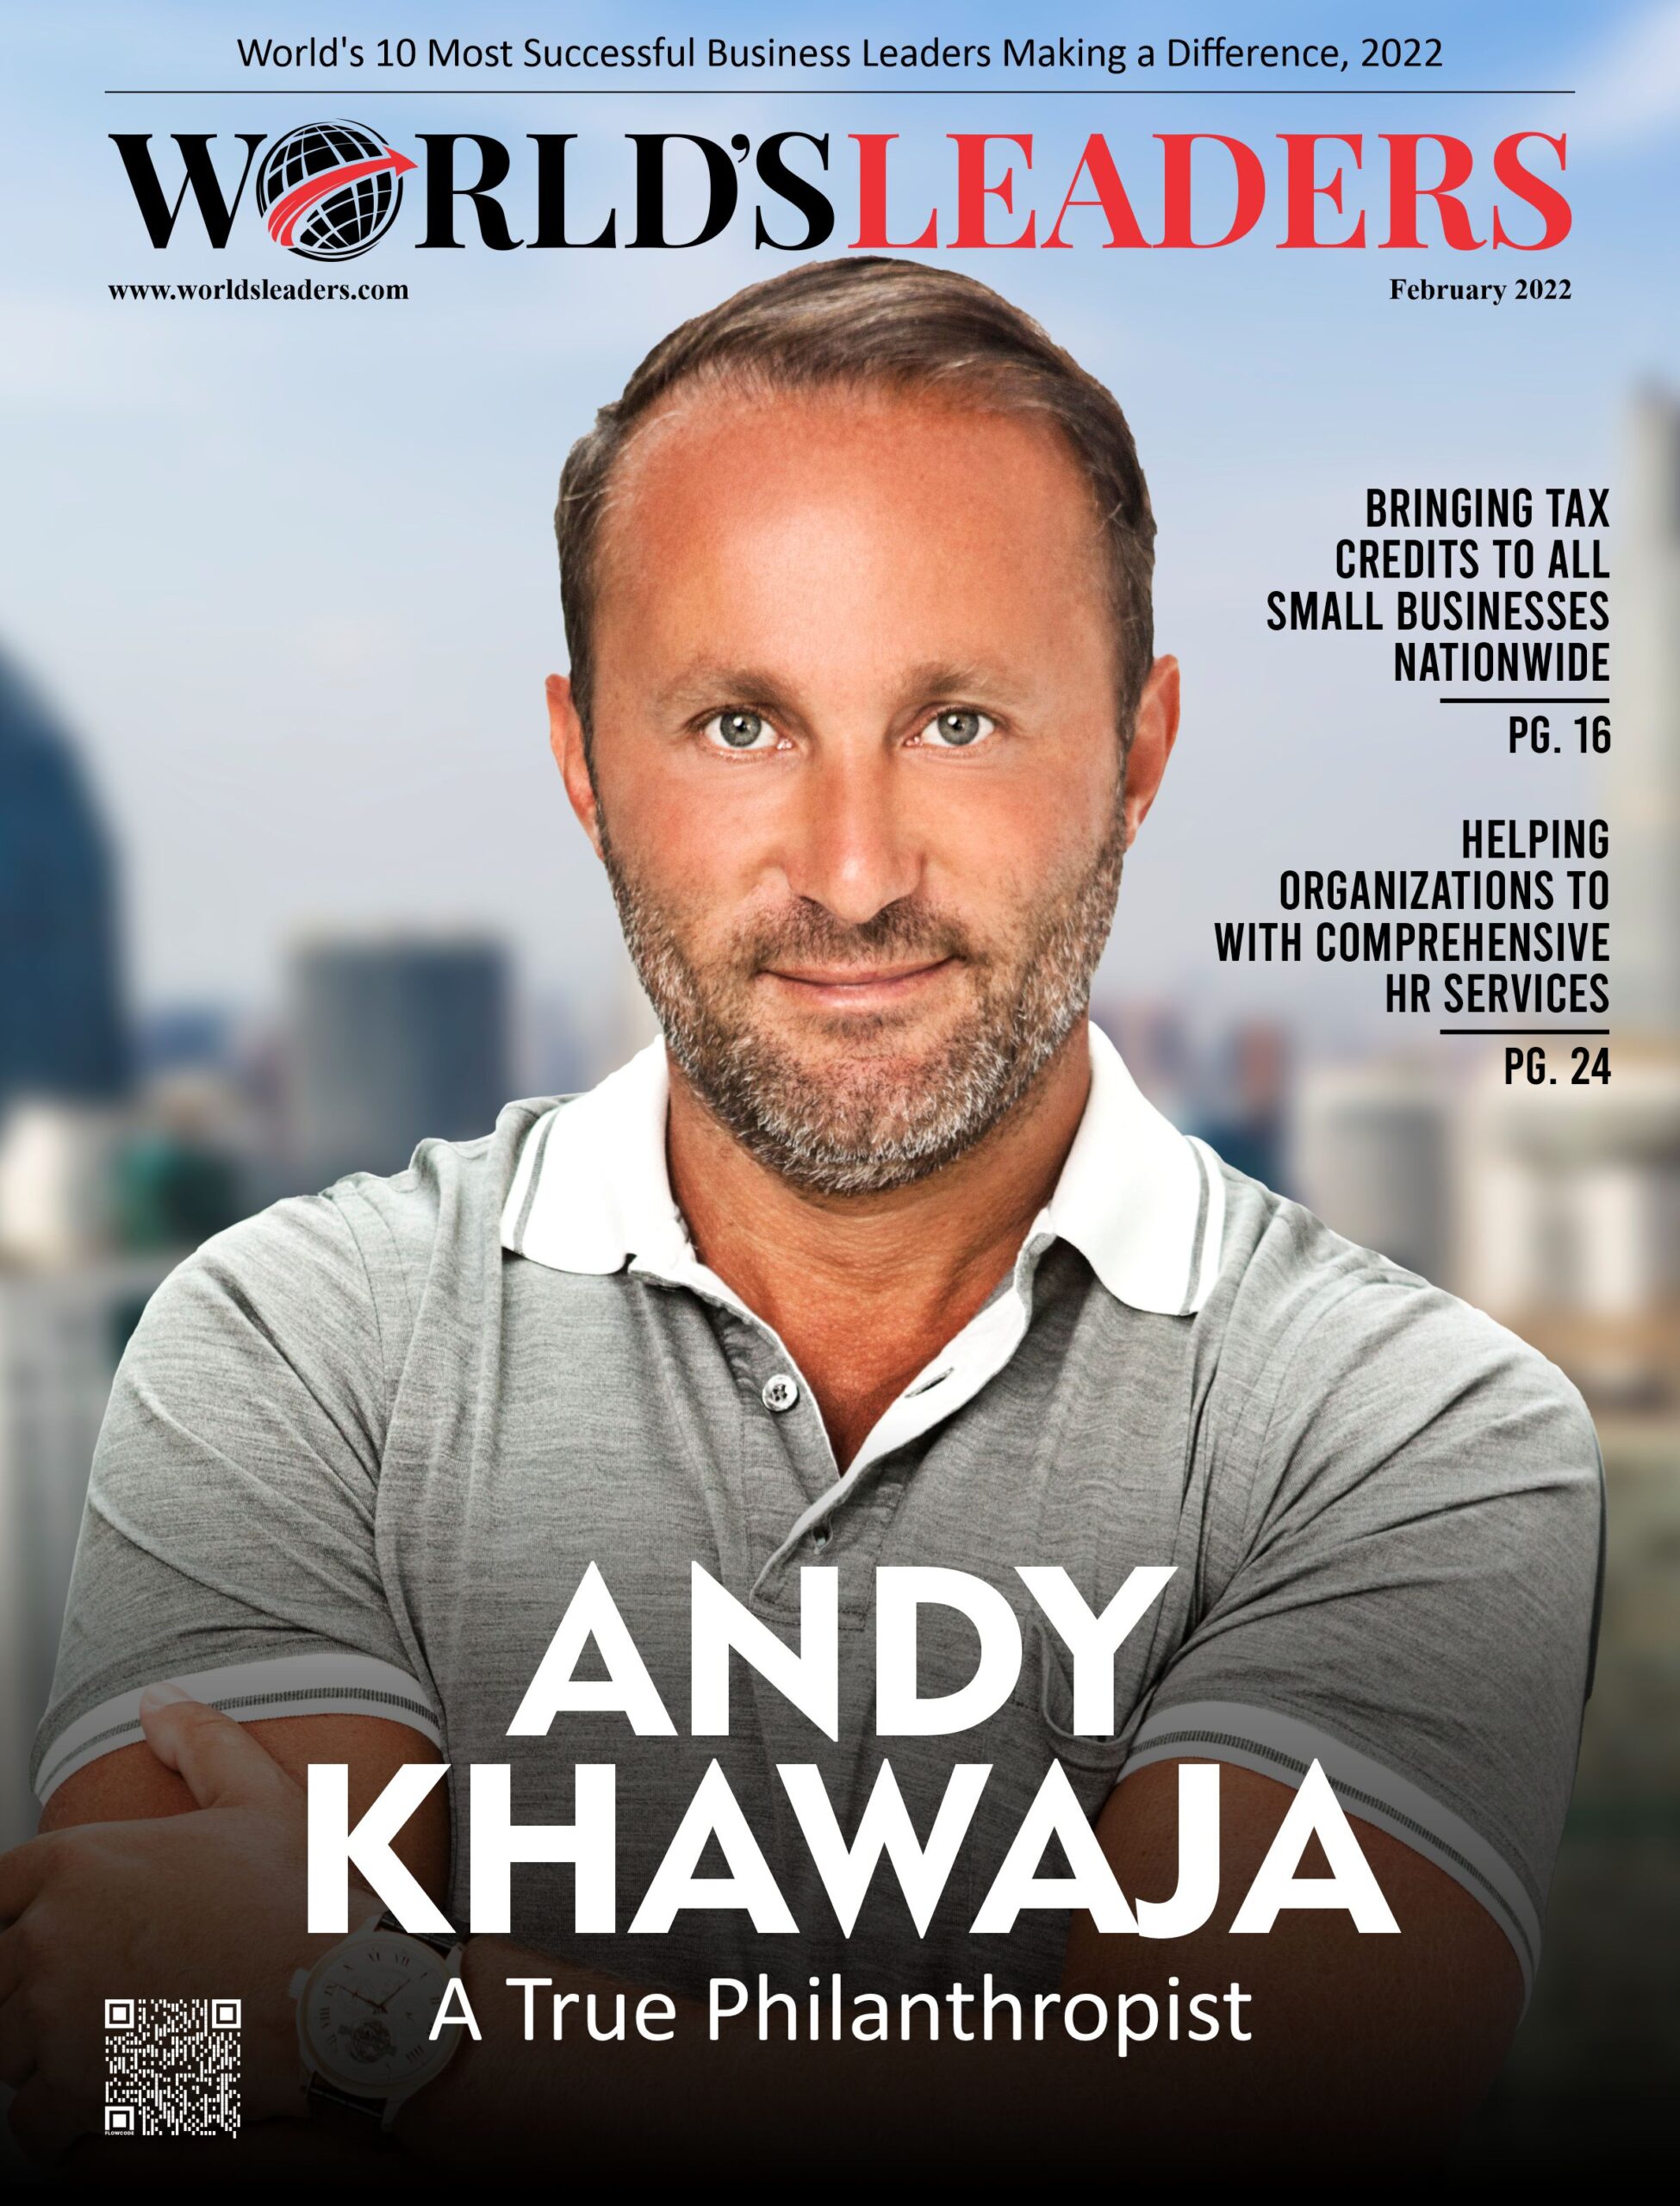 Andy Khawaja